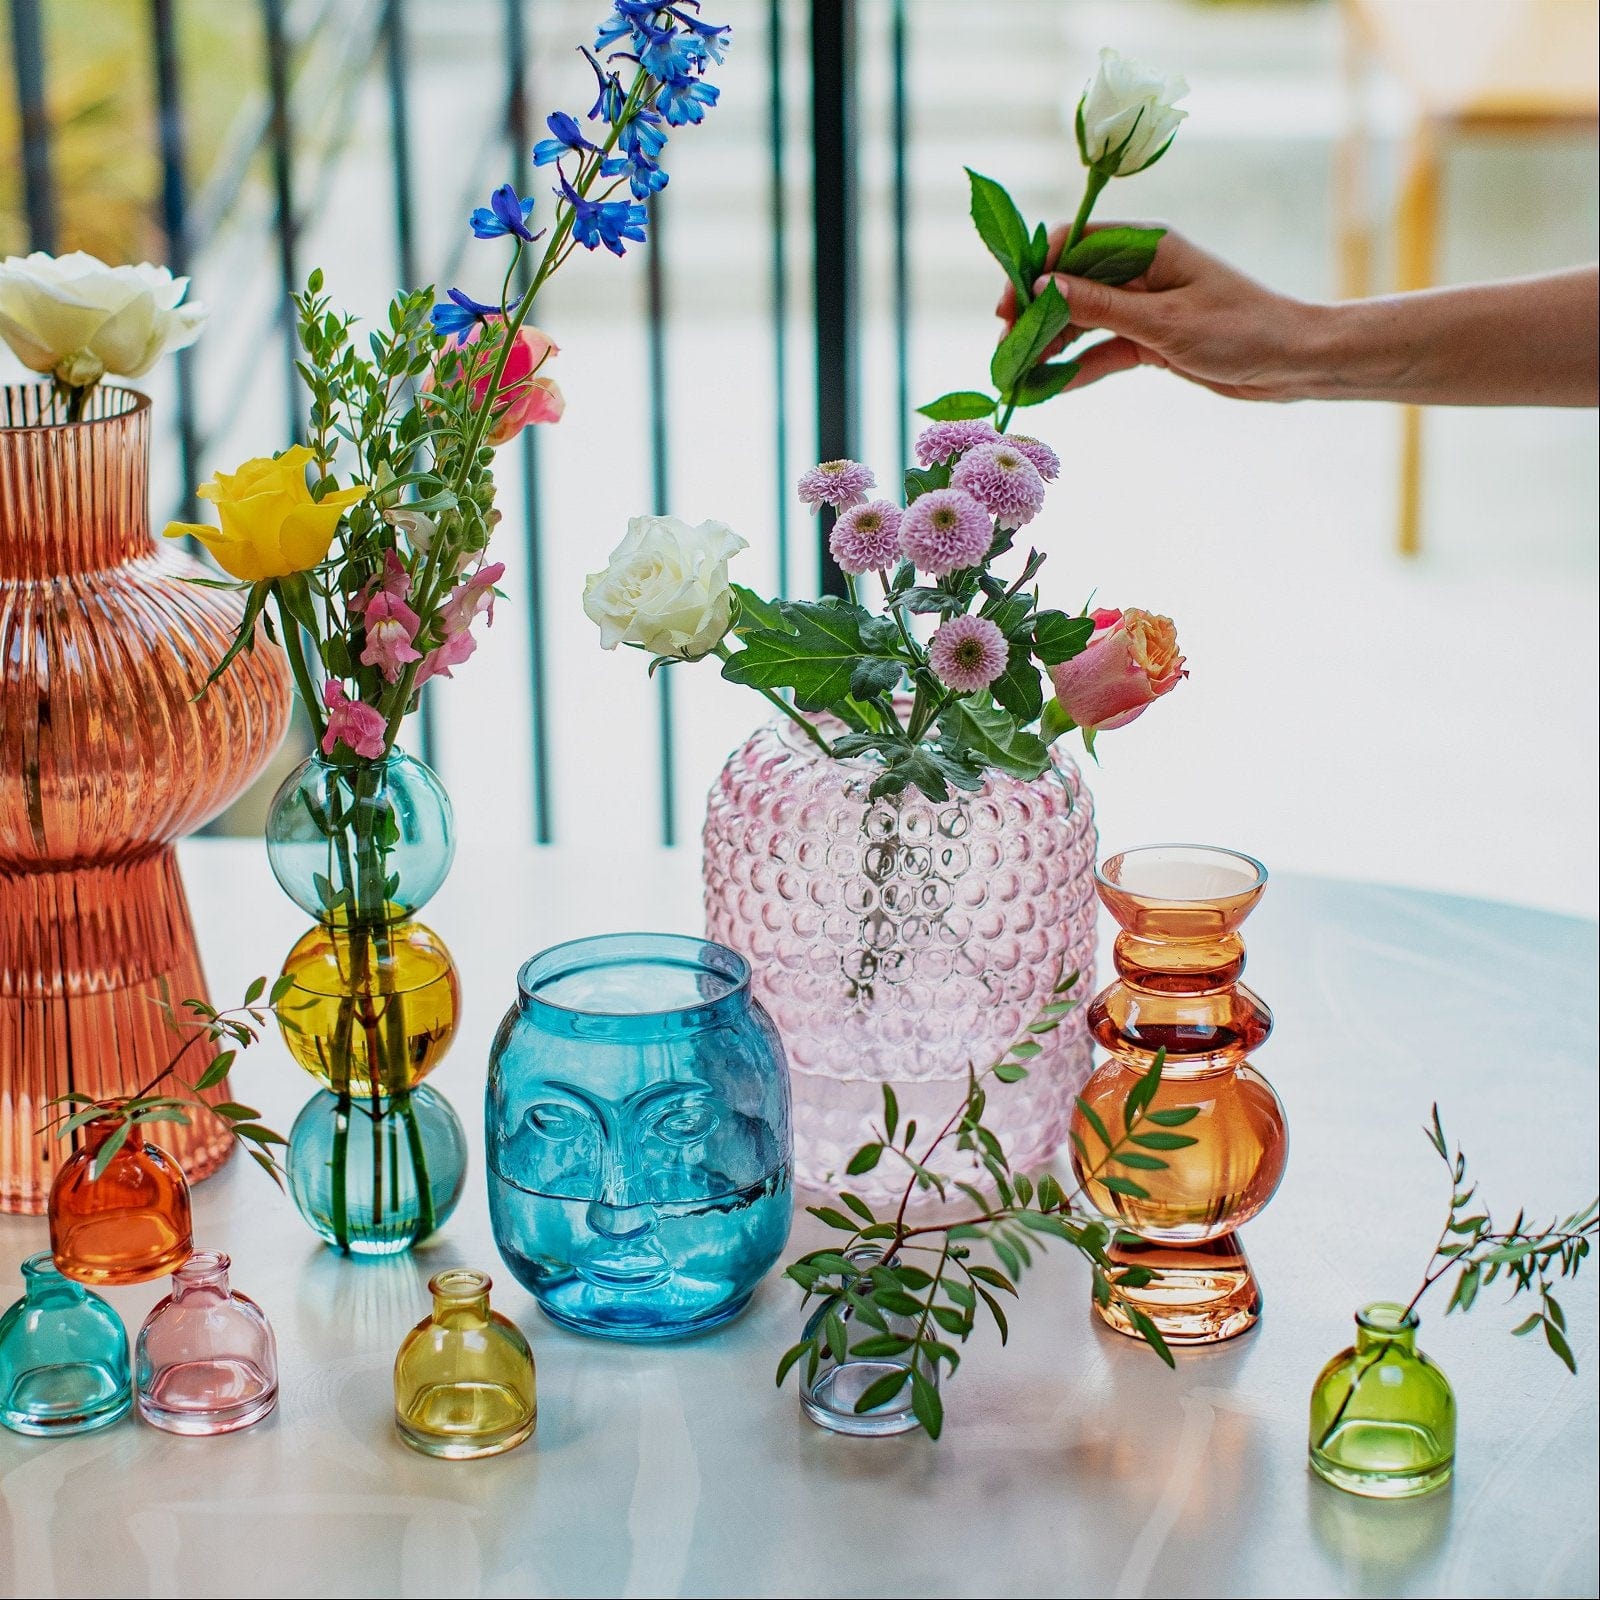 Warm Toned Mini Bud Vases - Set of 3 - Kaftan direct